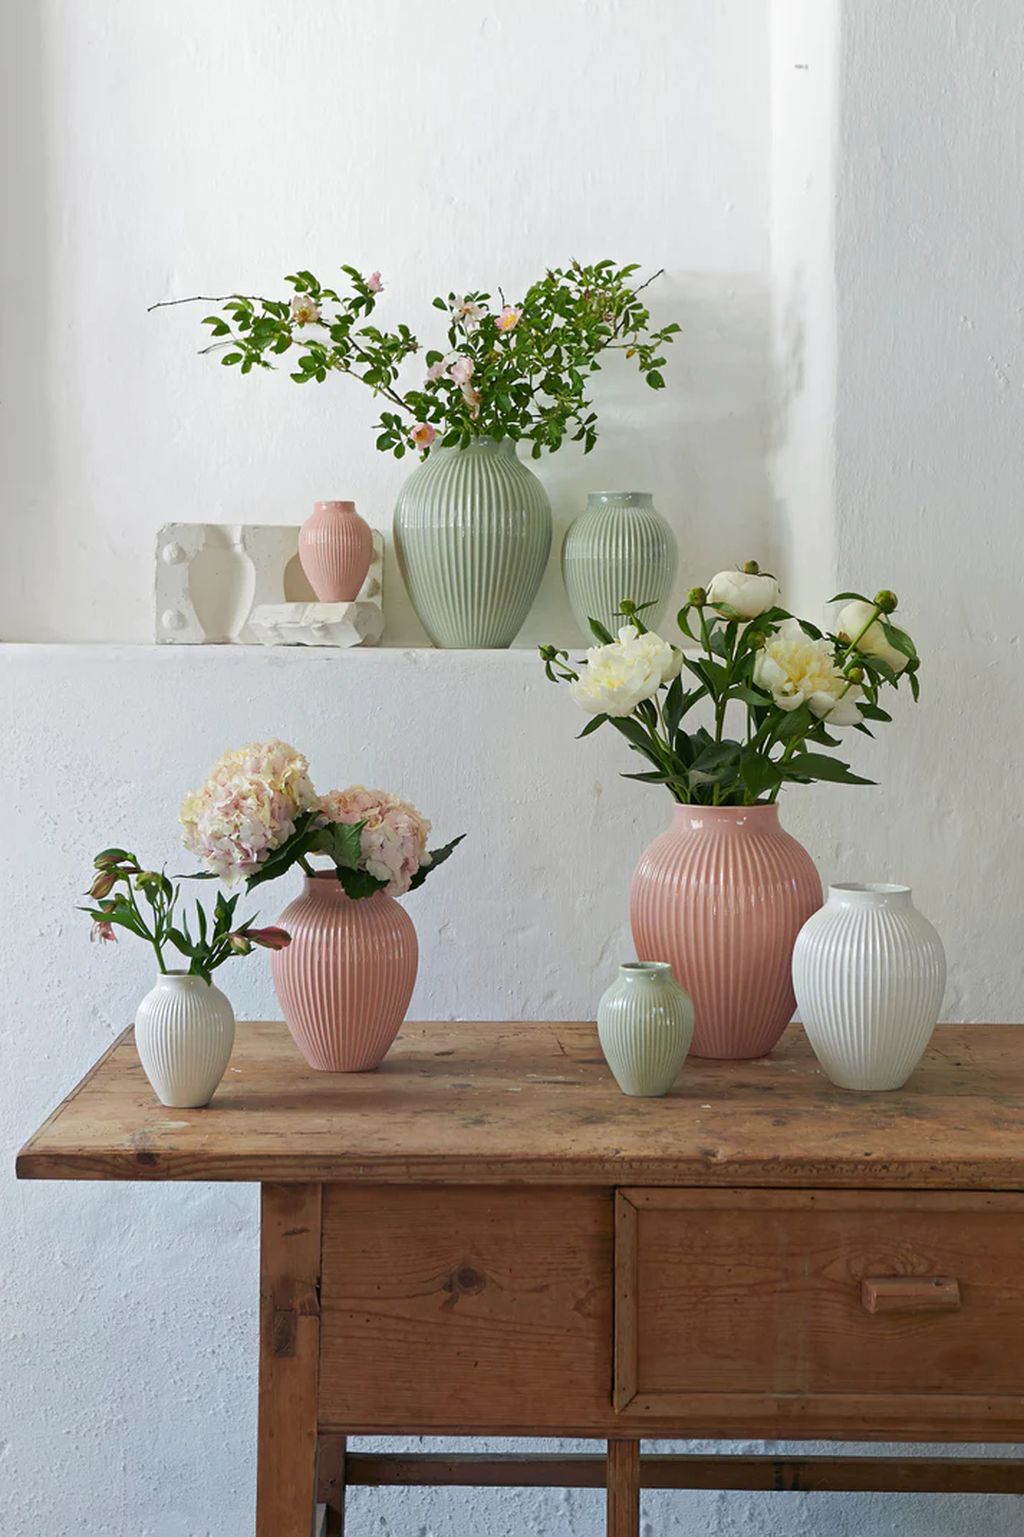 Knabstrup Keramik Vaas met groeven h 20 cm, roze